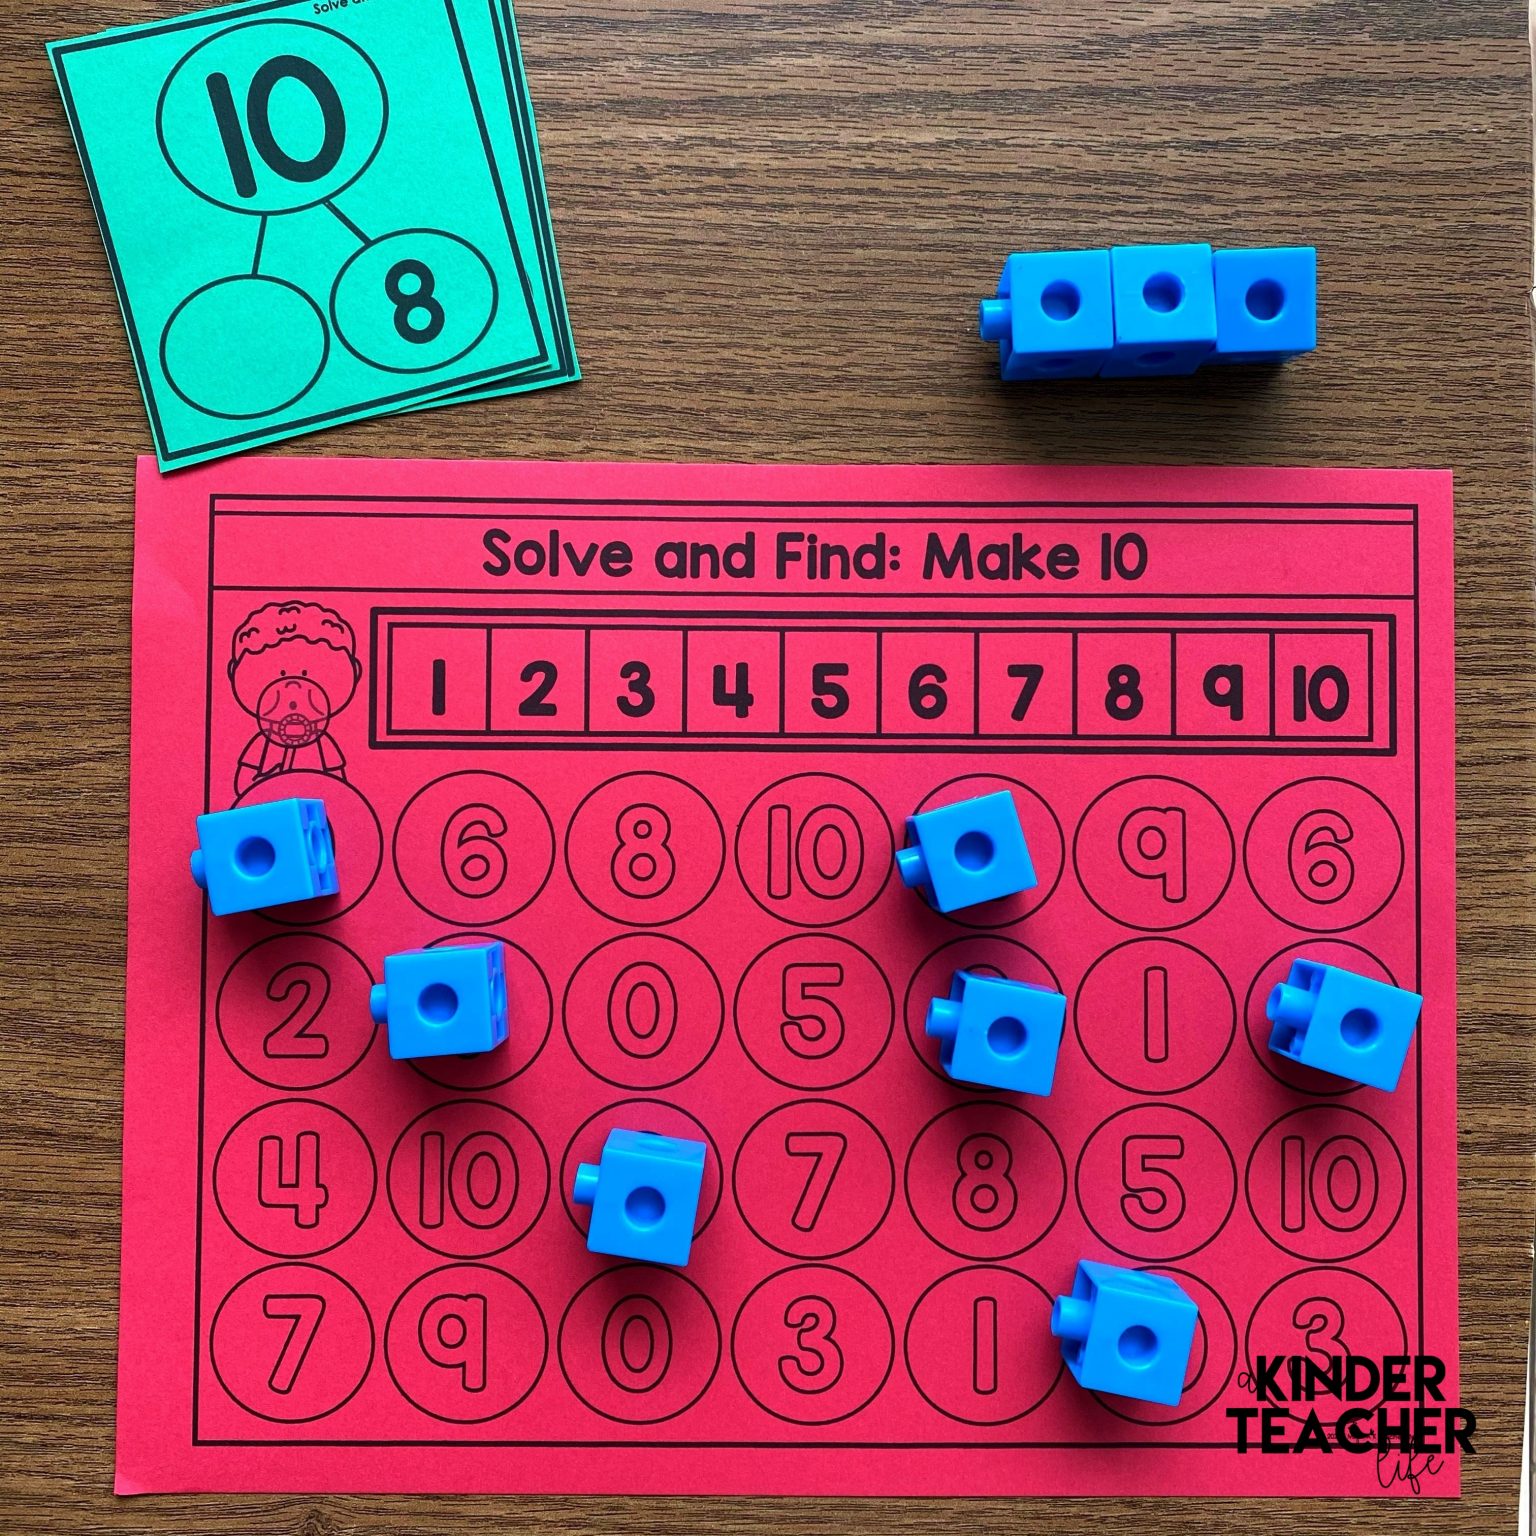 Ways To Make 10 In Multiplication